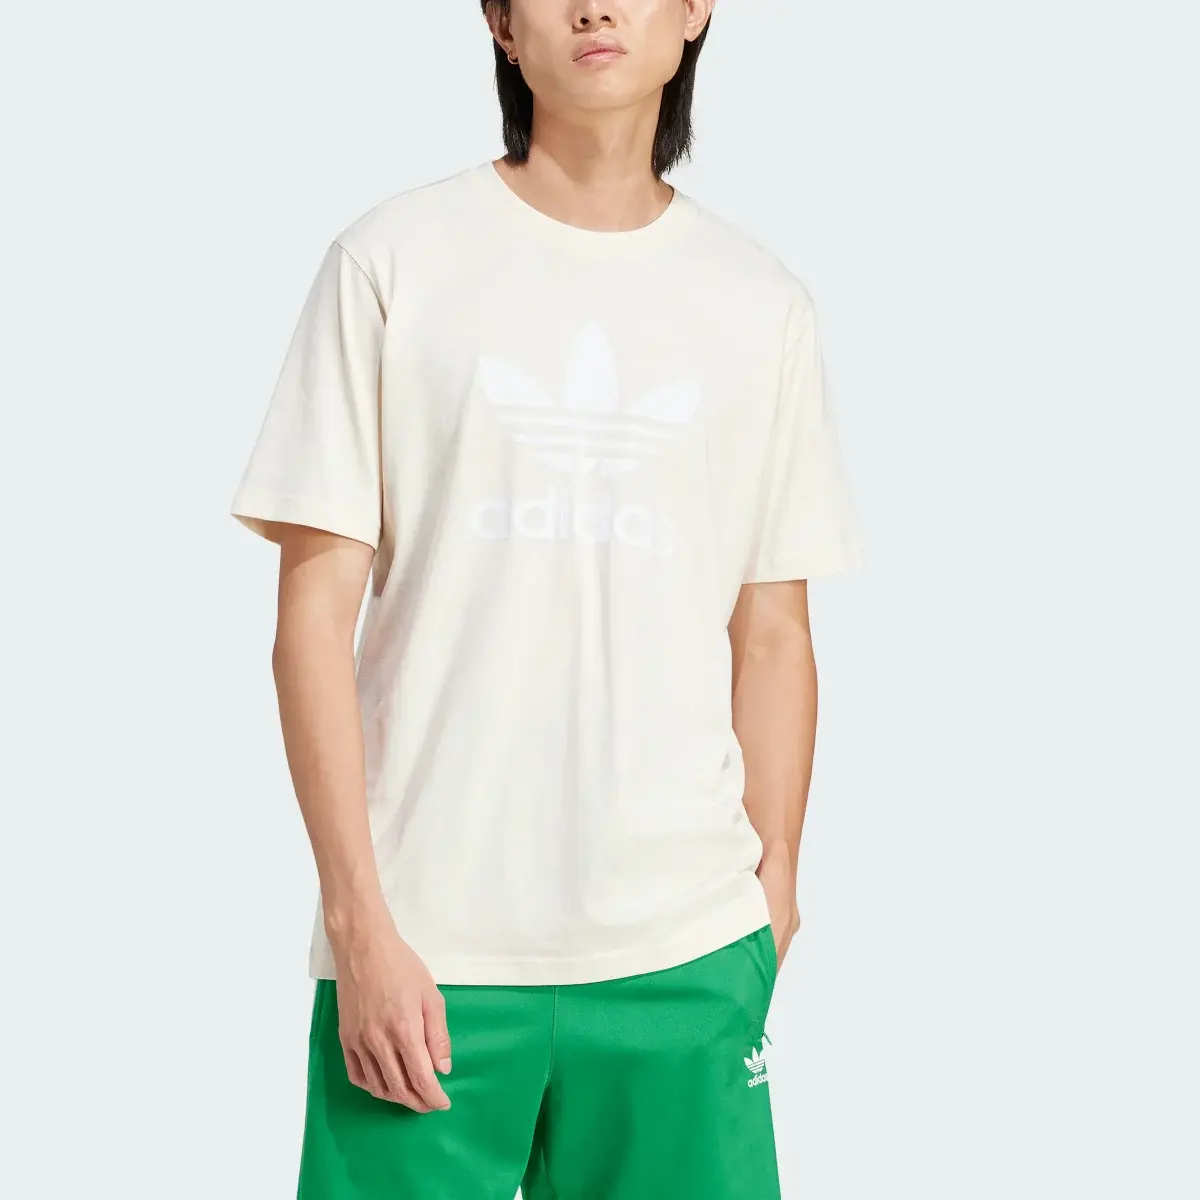 Adidas Koszulka Adicolor Trefoil. 1